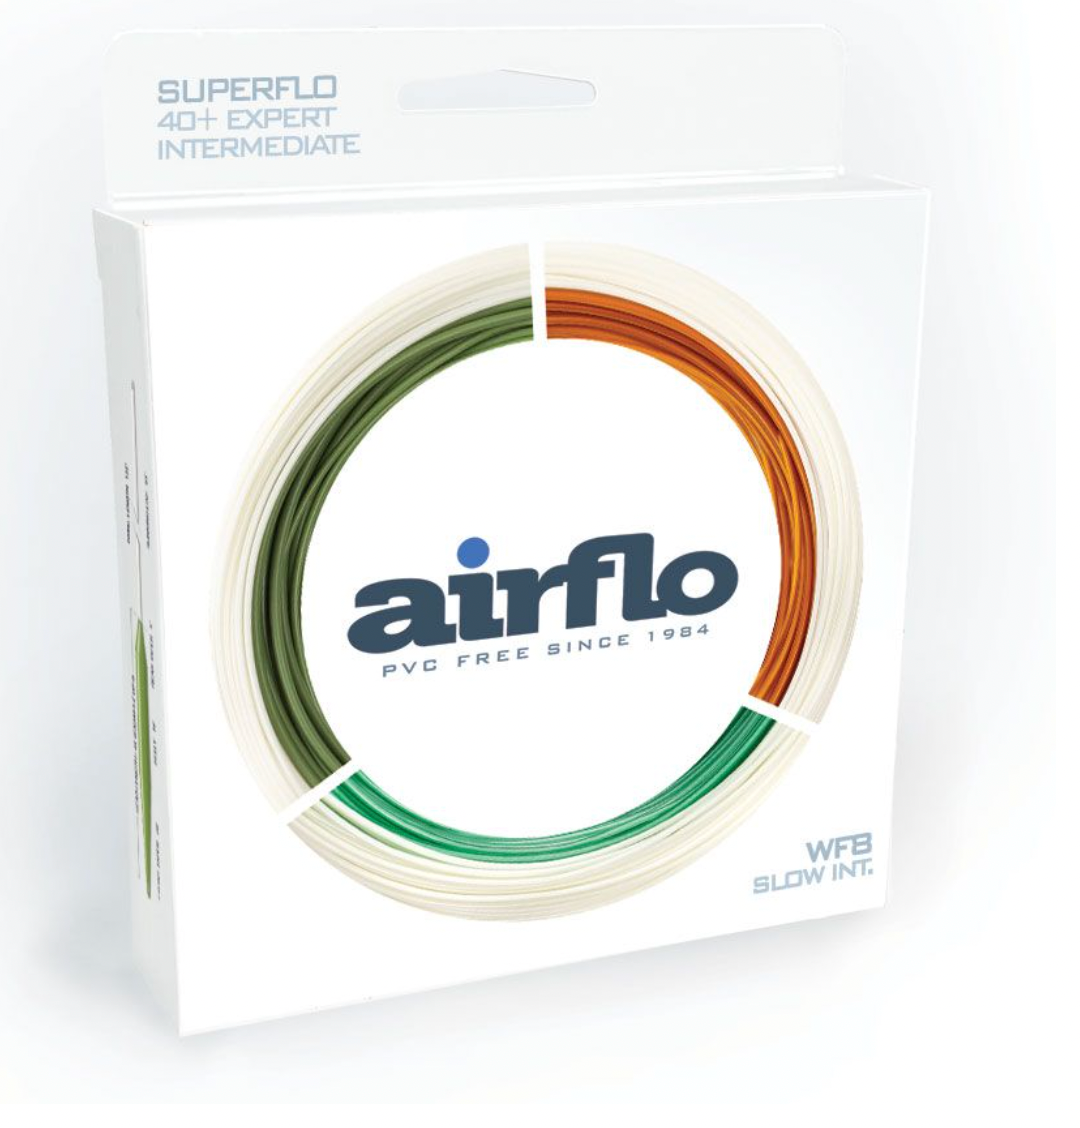 Airflo Superflo 40+ expert intermediaire